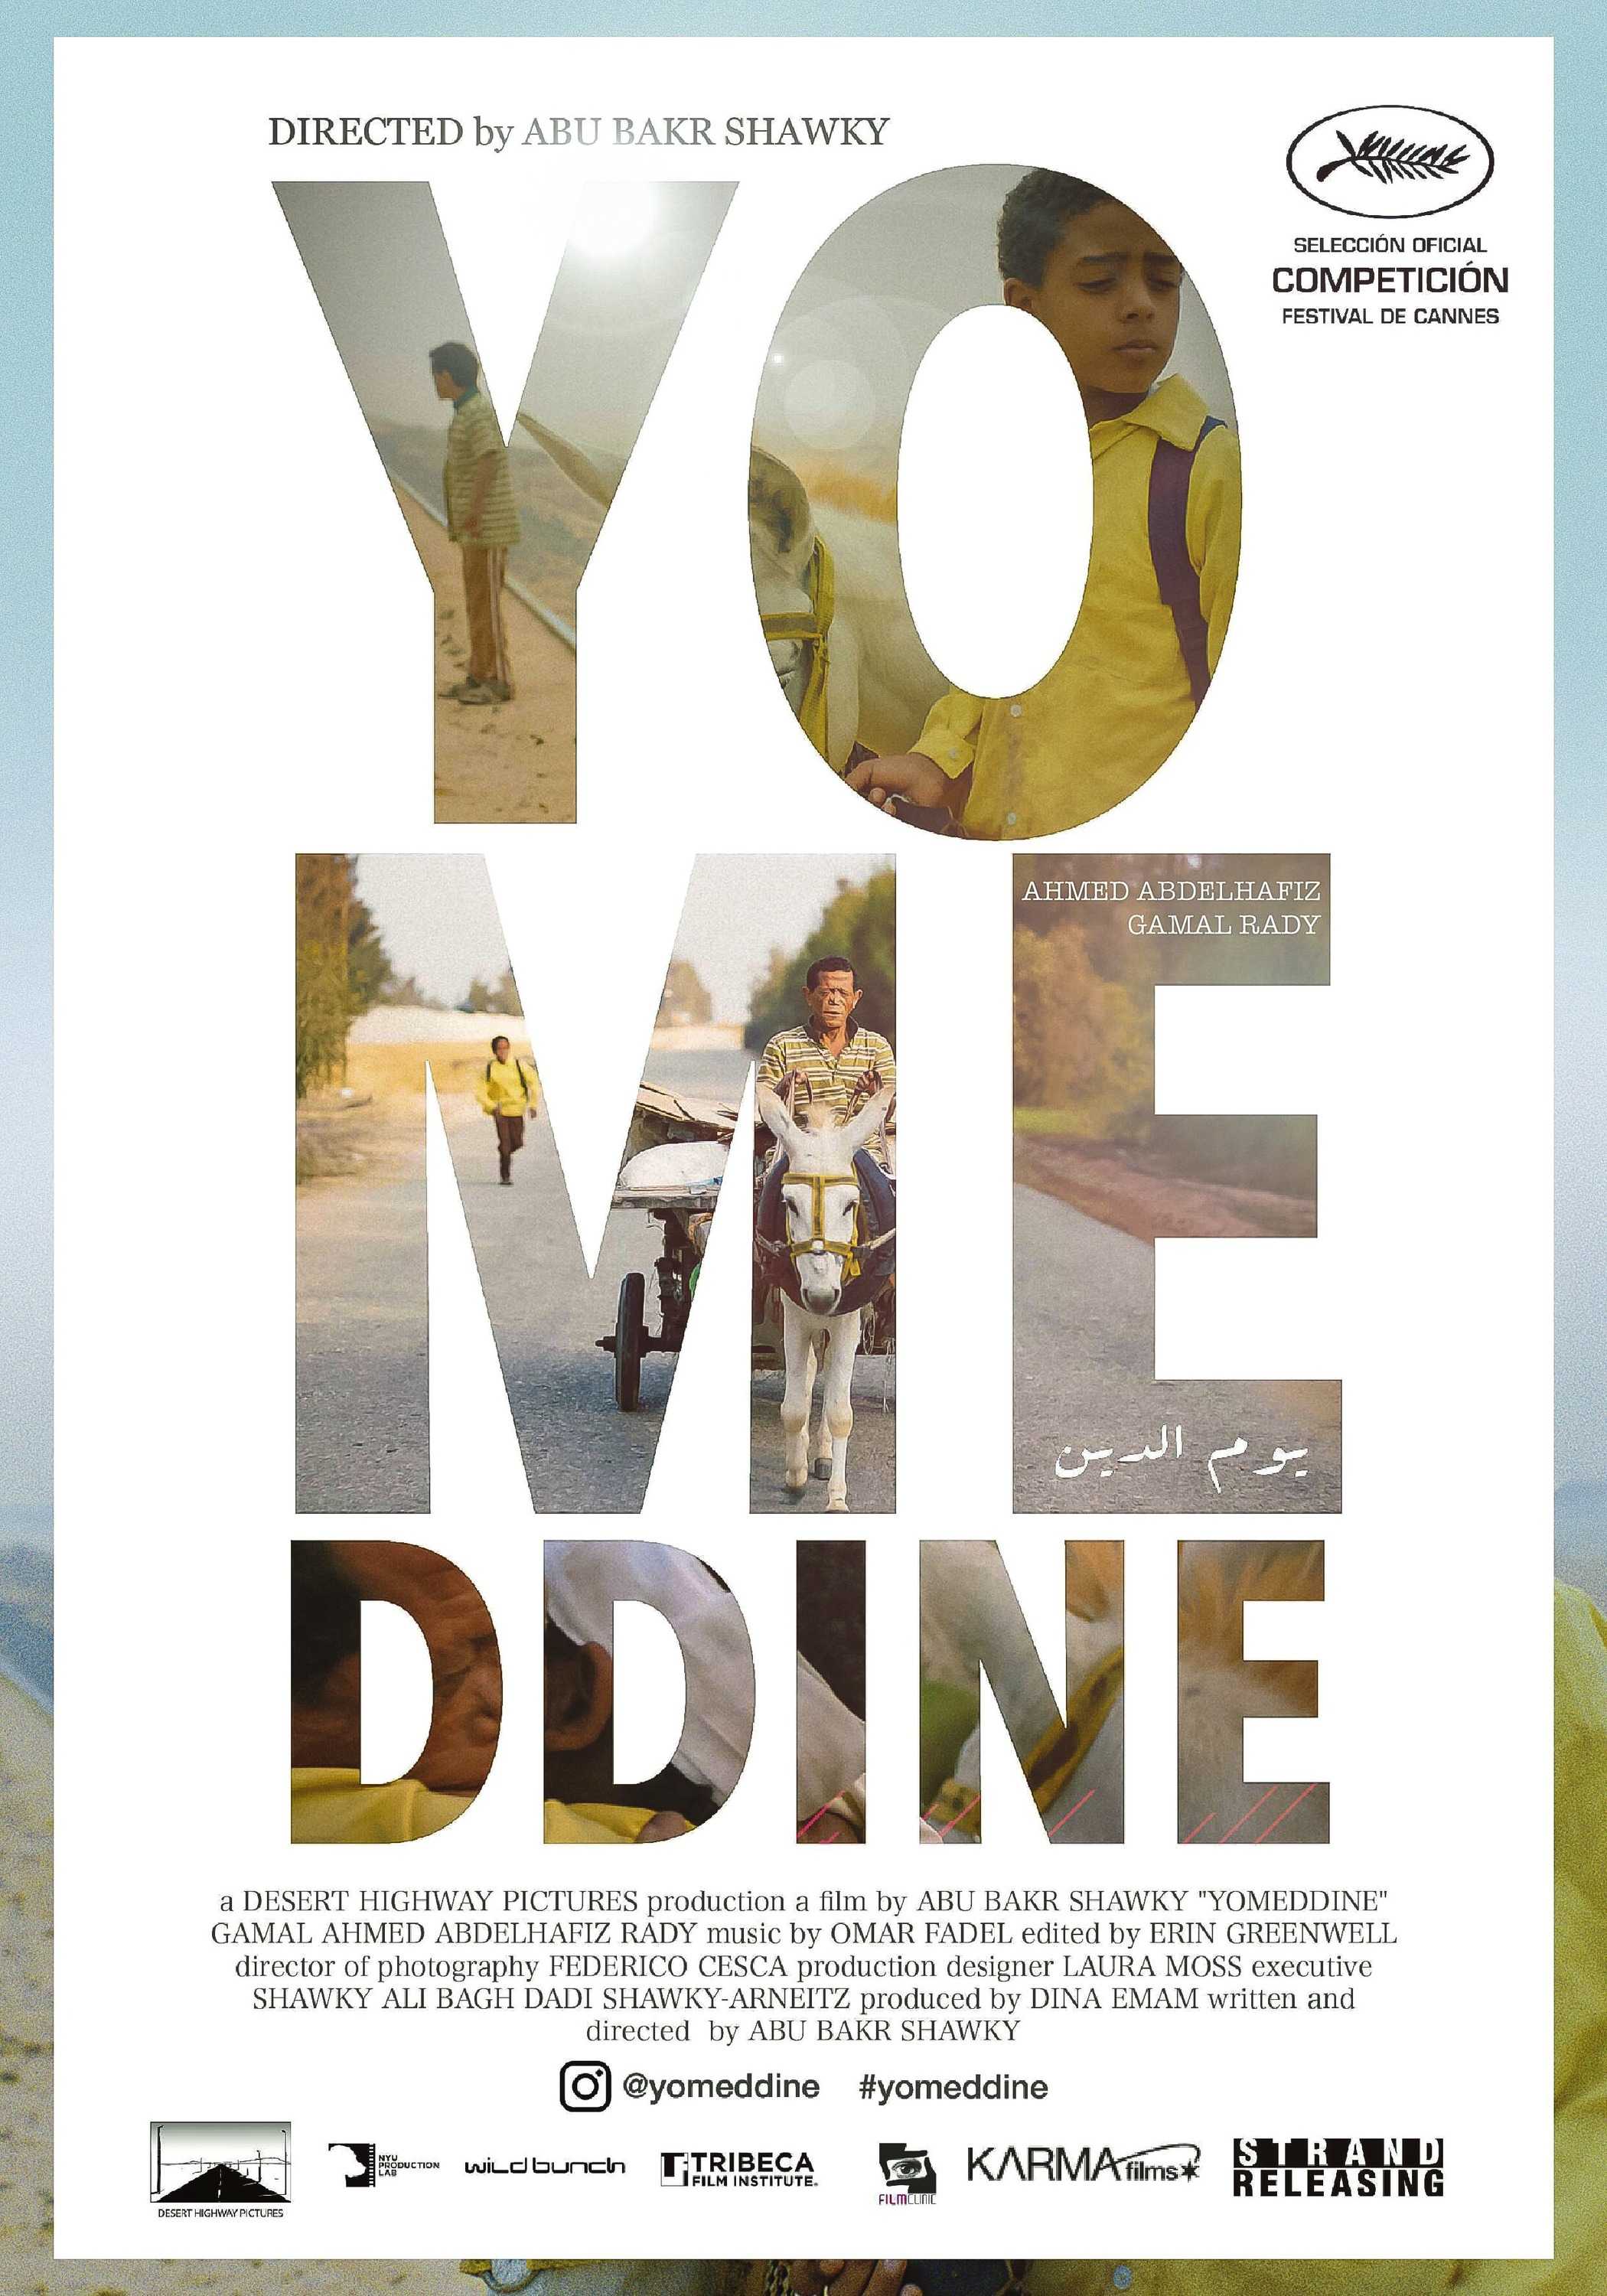 Mega Sized Movie Poster Image for Yomeddine 